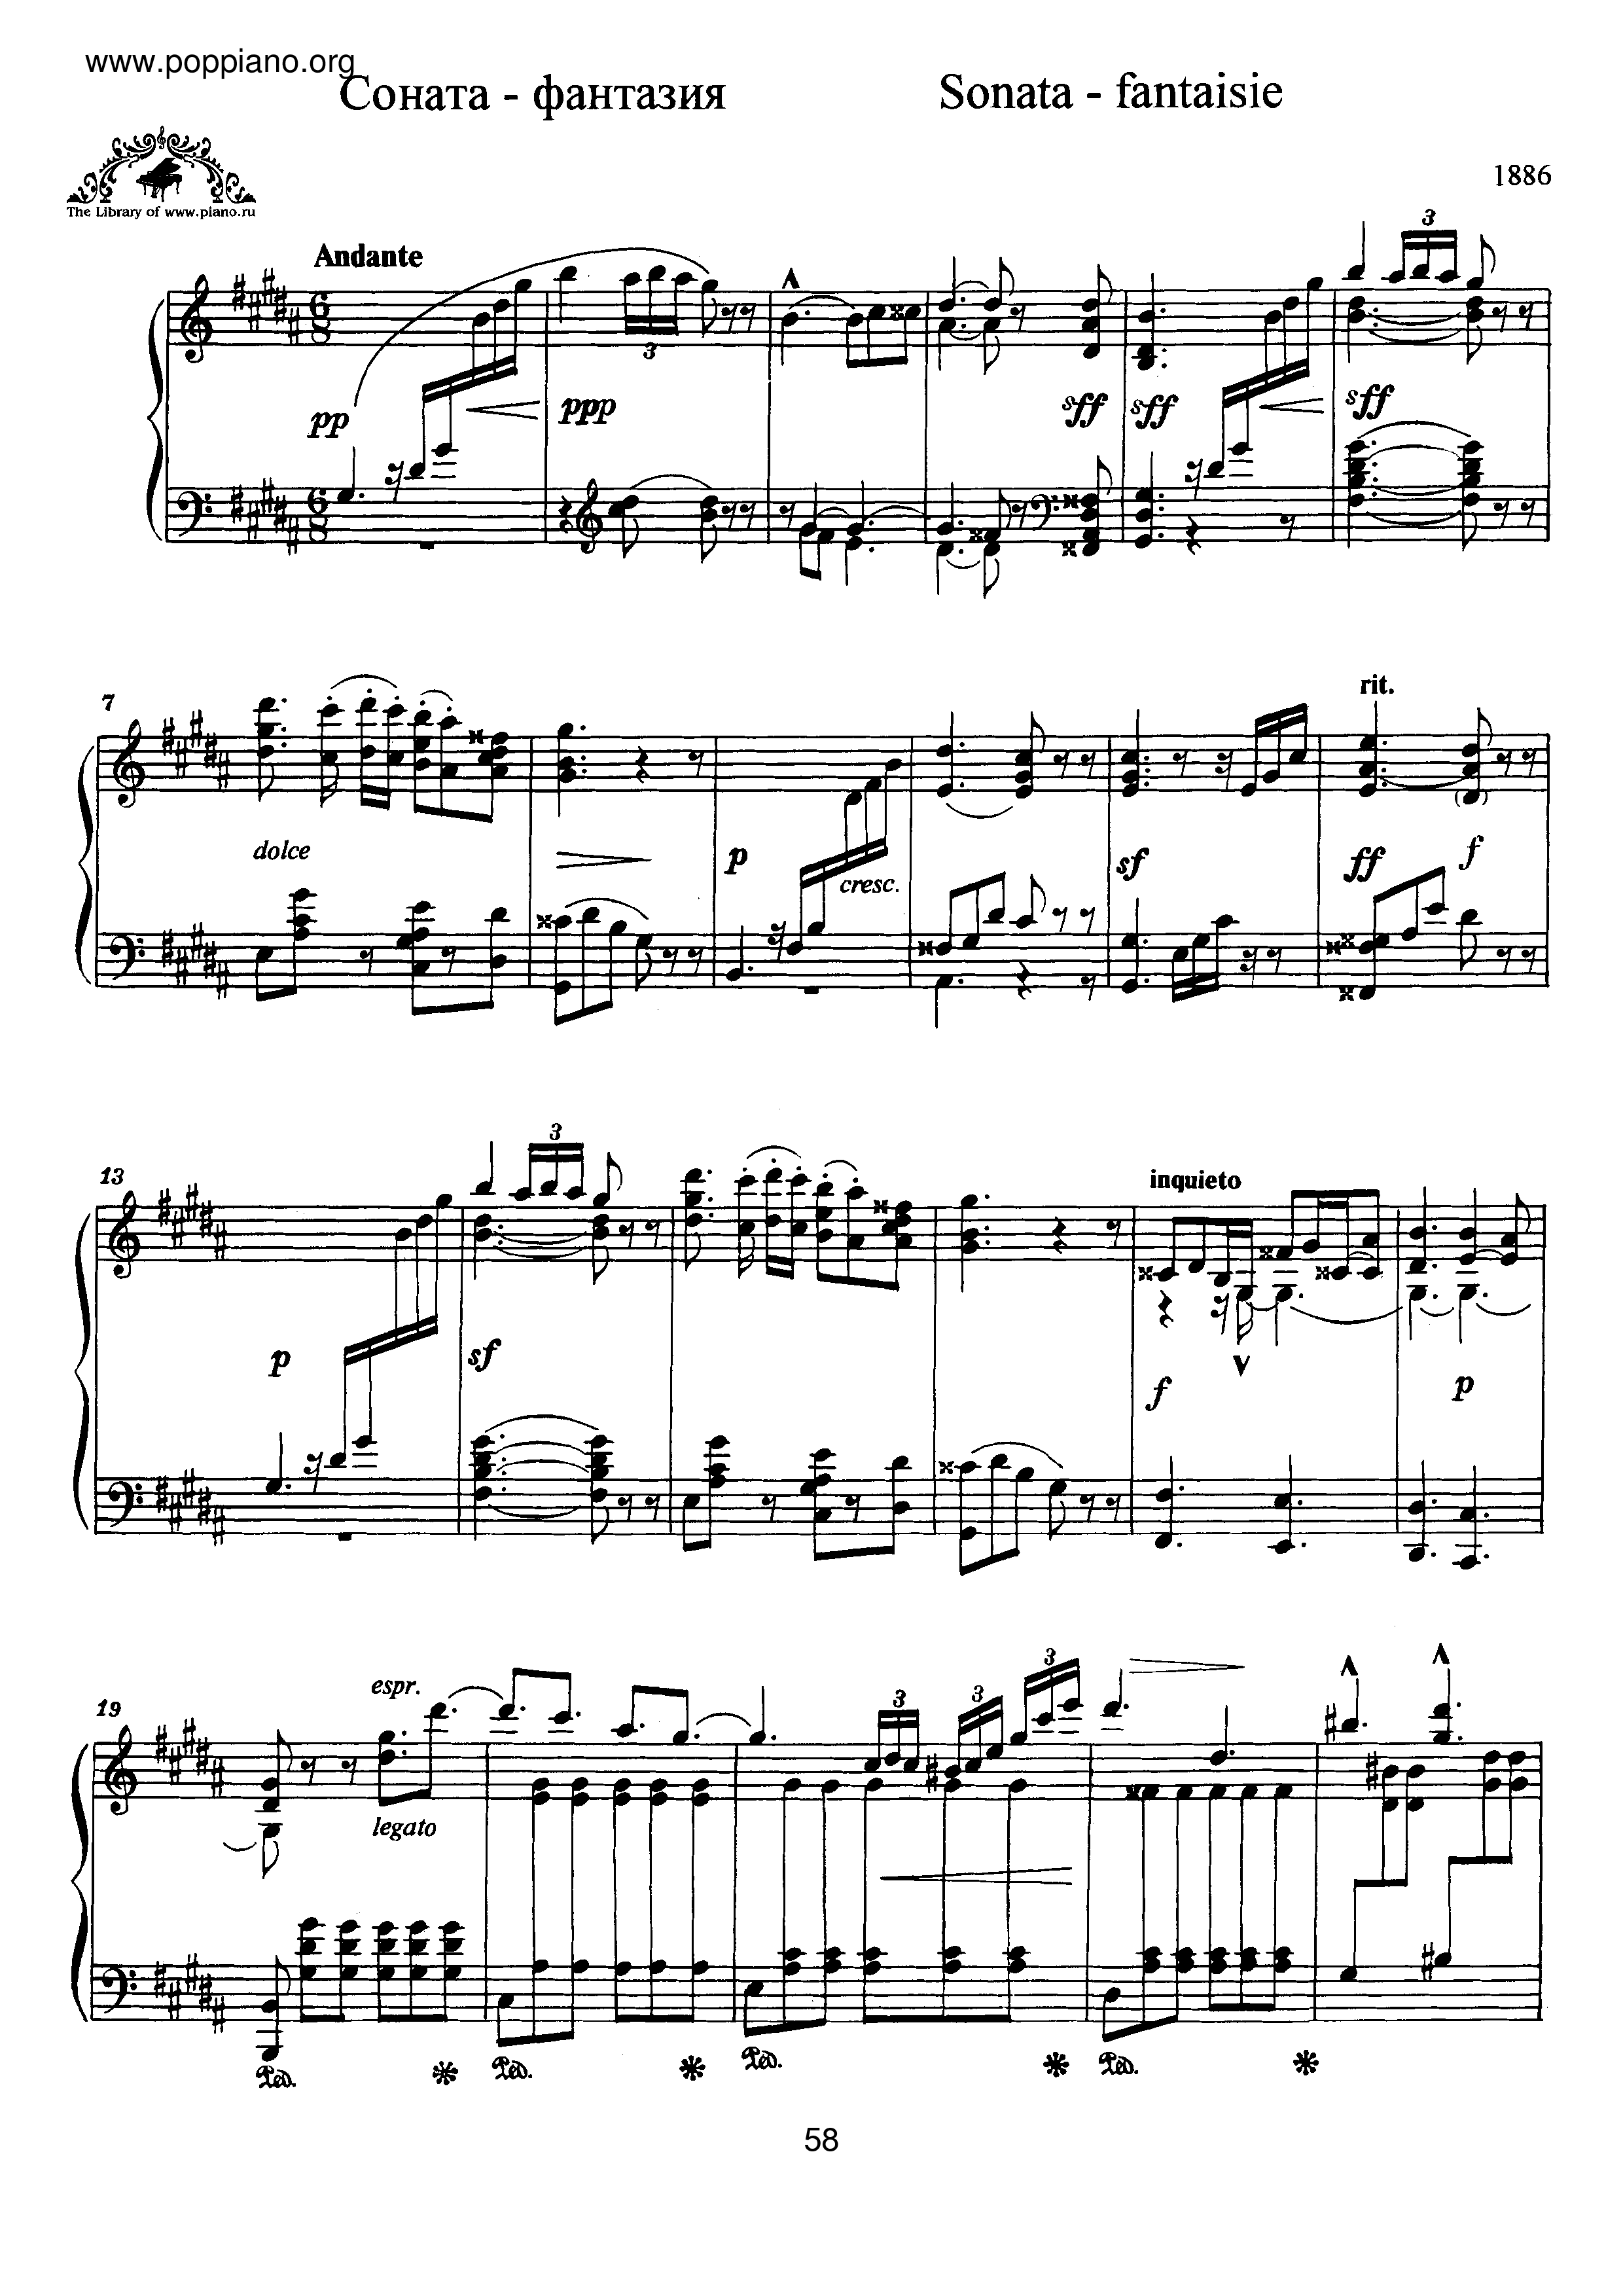 Sonata-Fantasie Score